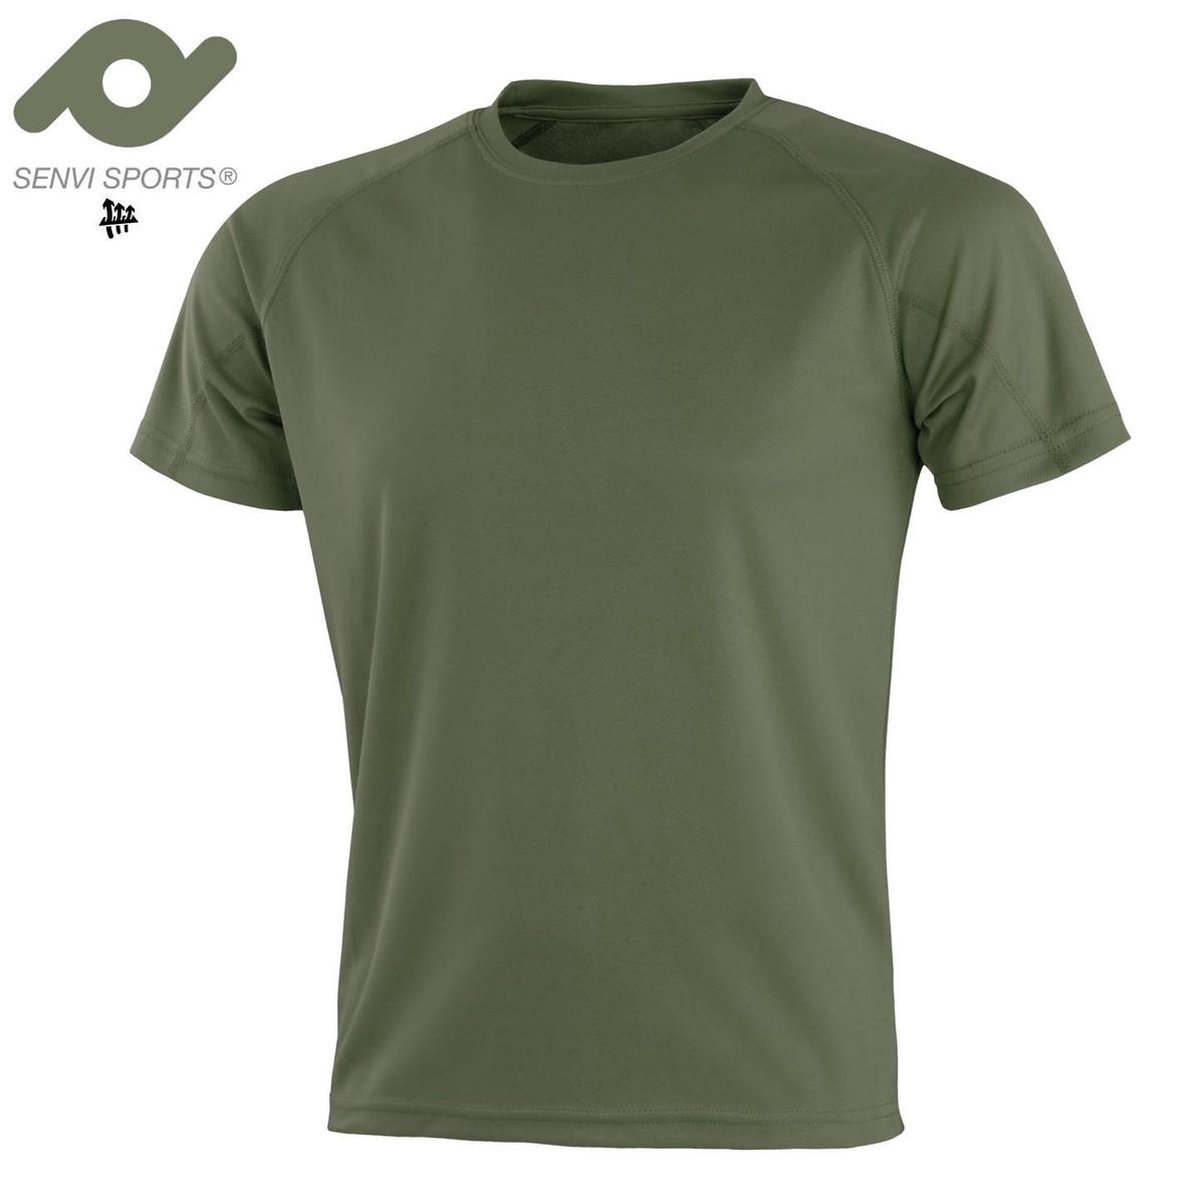 Senvi Sports Performance T-Shirt - Olive - L - Unisex